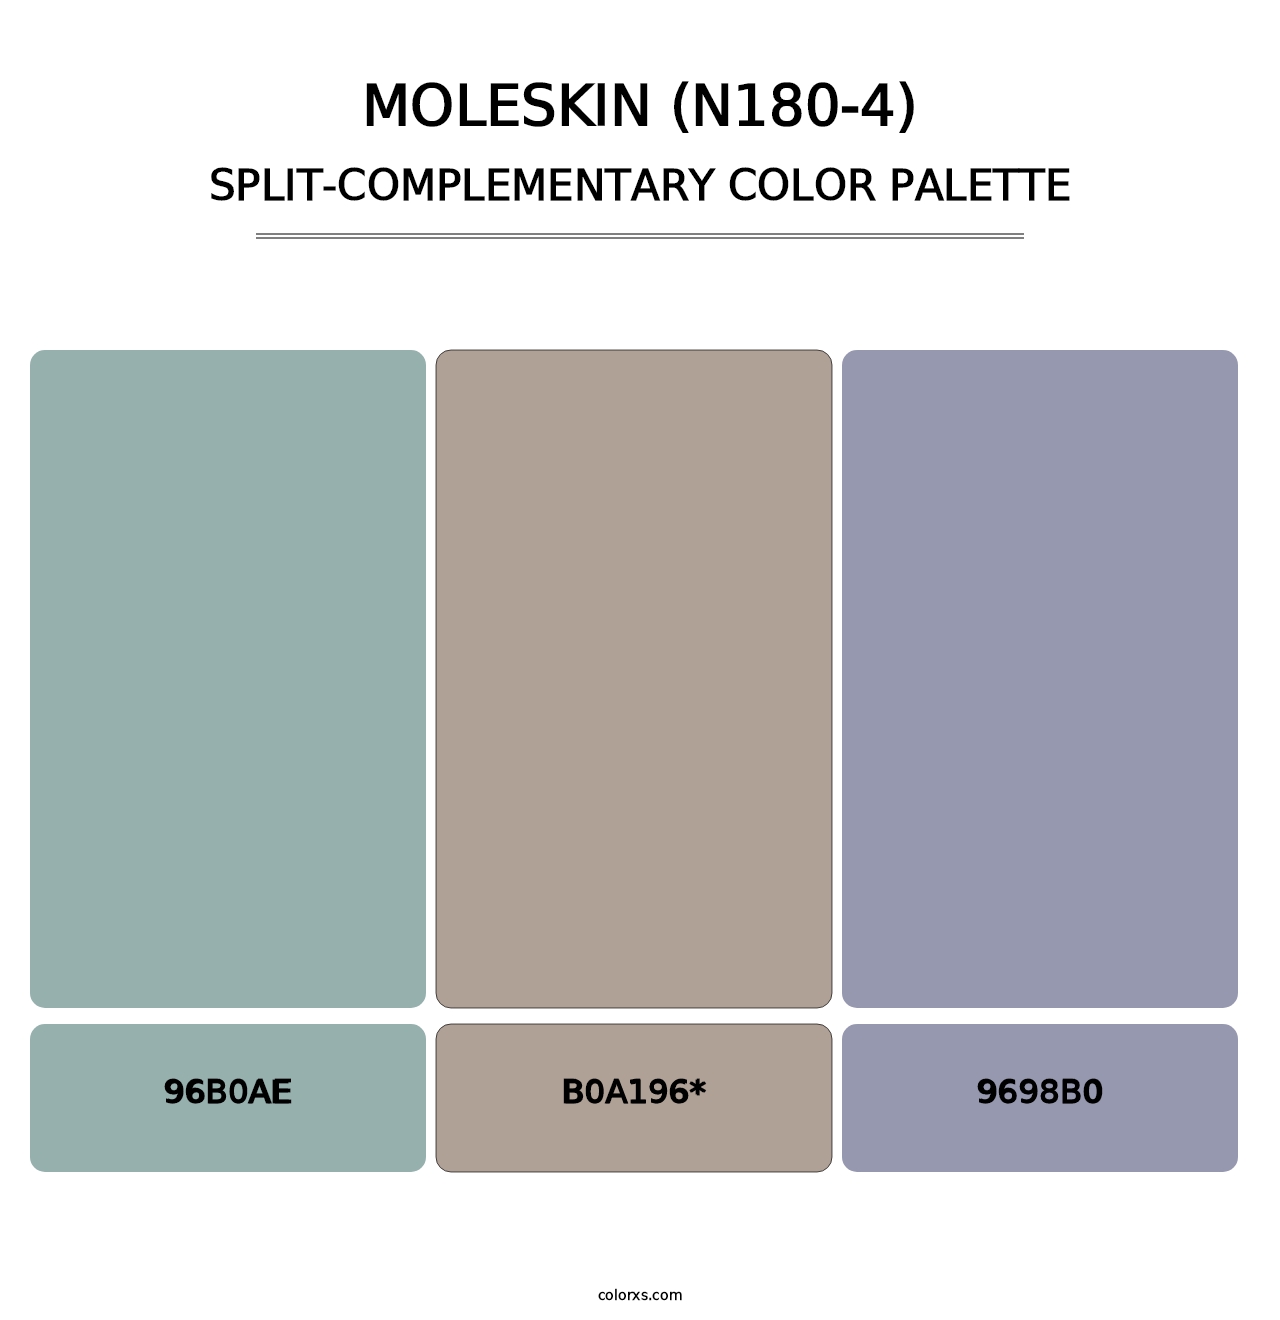 Moleskin (N180-4) - Split-Complementary Color Palette